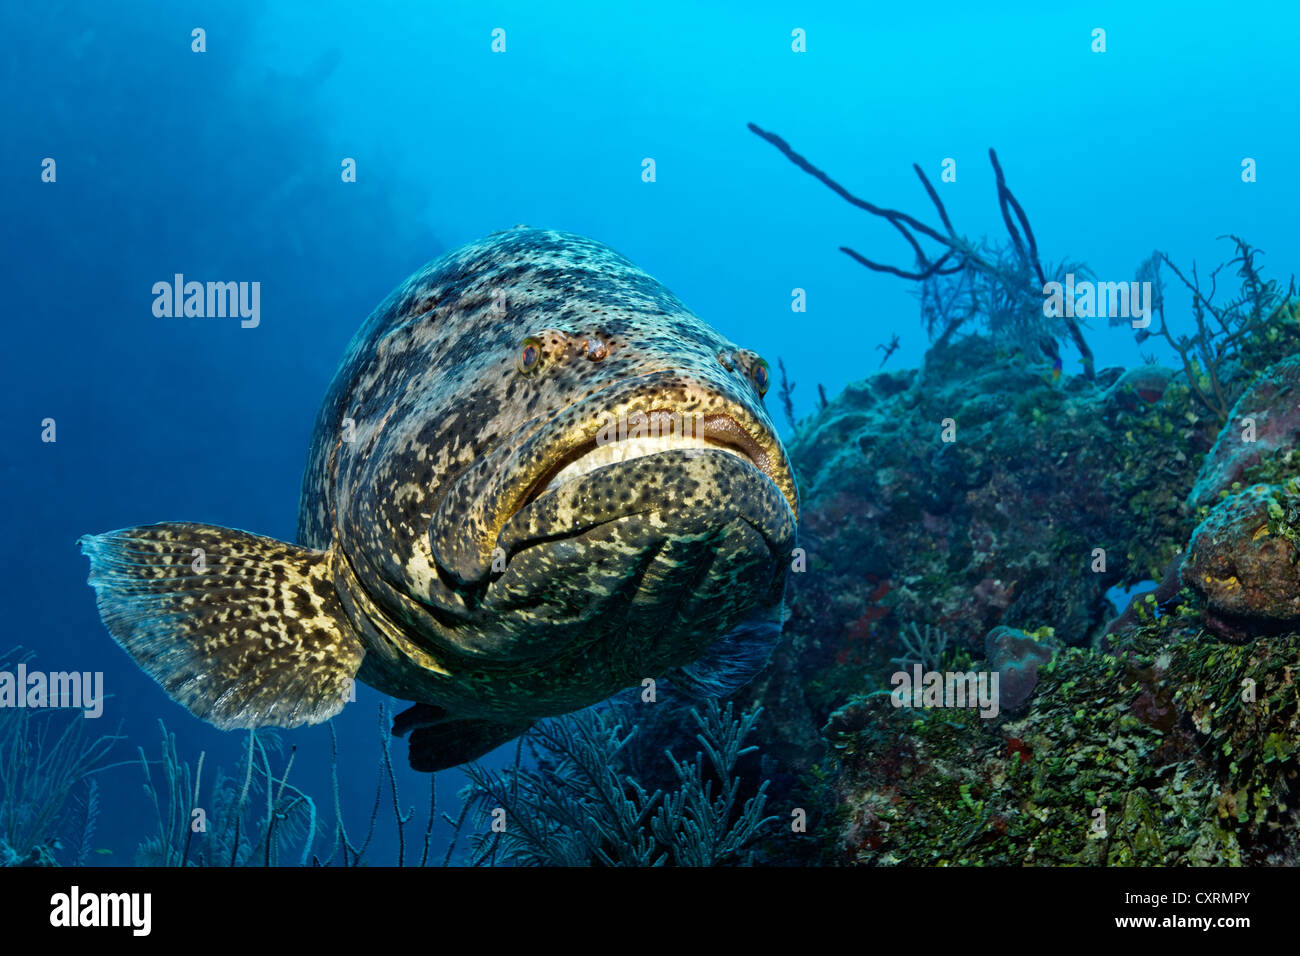 Atlantic goliath grouper fish or itajara or Jewfish (Epinephelus itajara) swimming in front of coral reef, Republic of Cuba Stock Photo